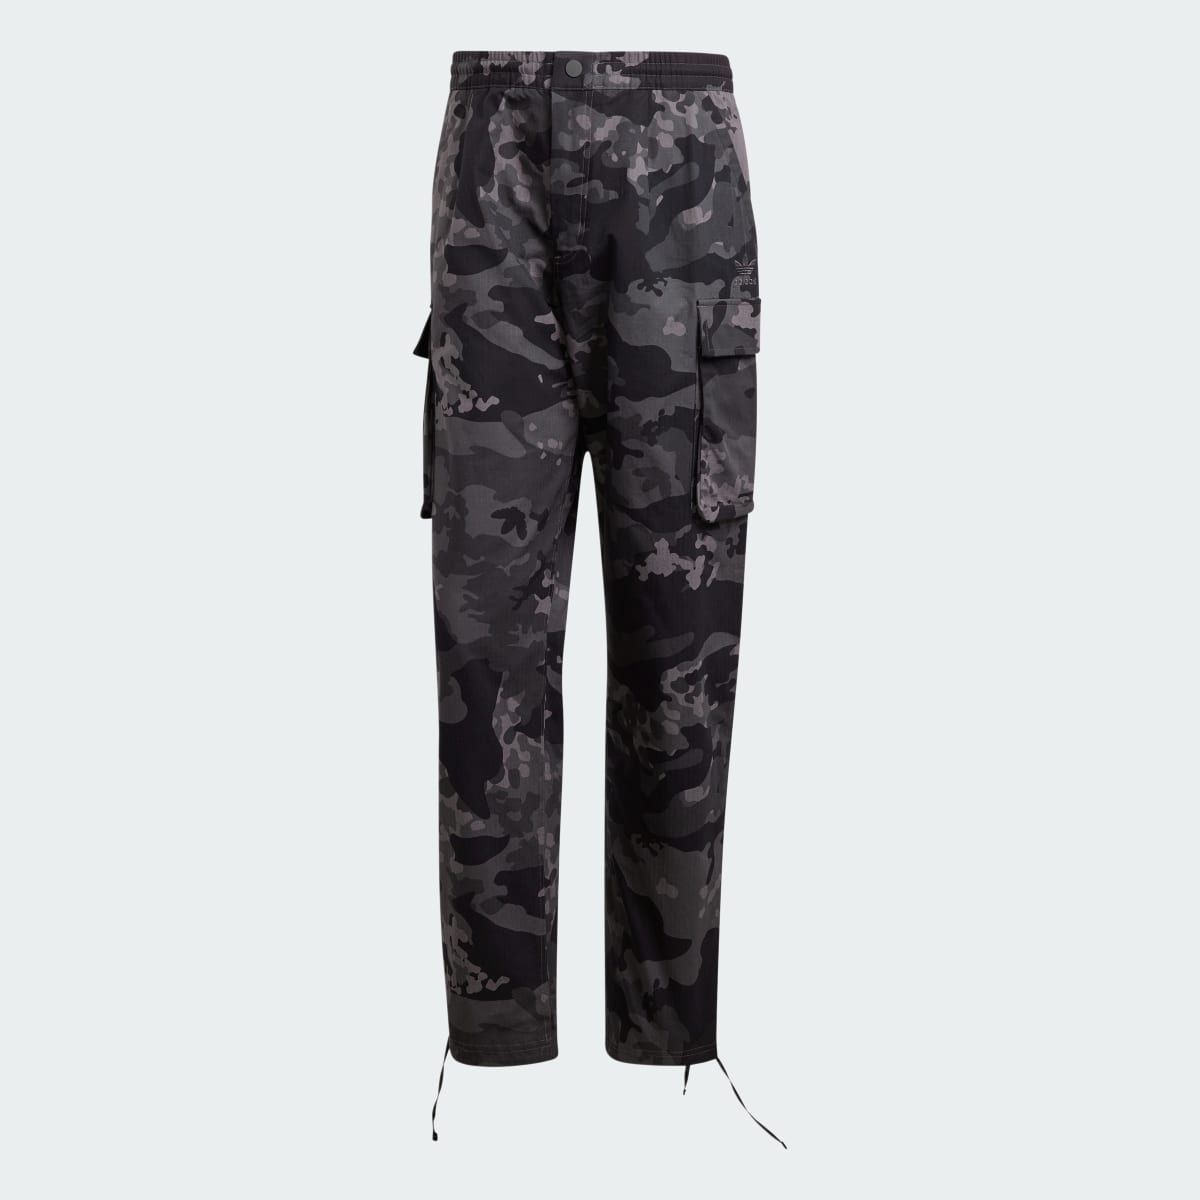 Adidas Pantalon cargo graphique imprimé camouflage. 4